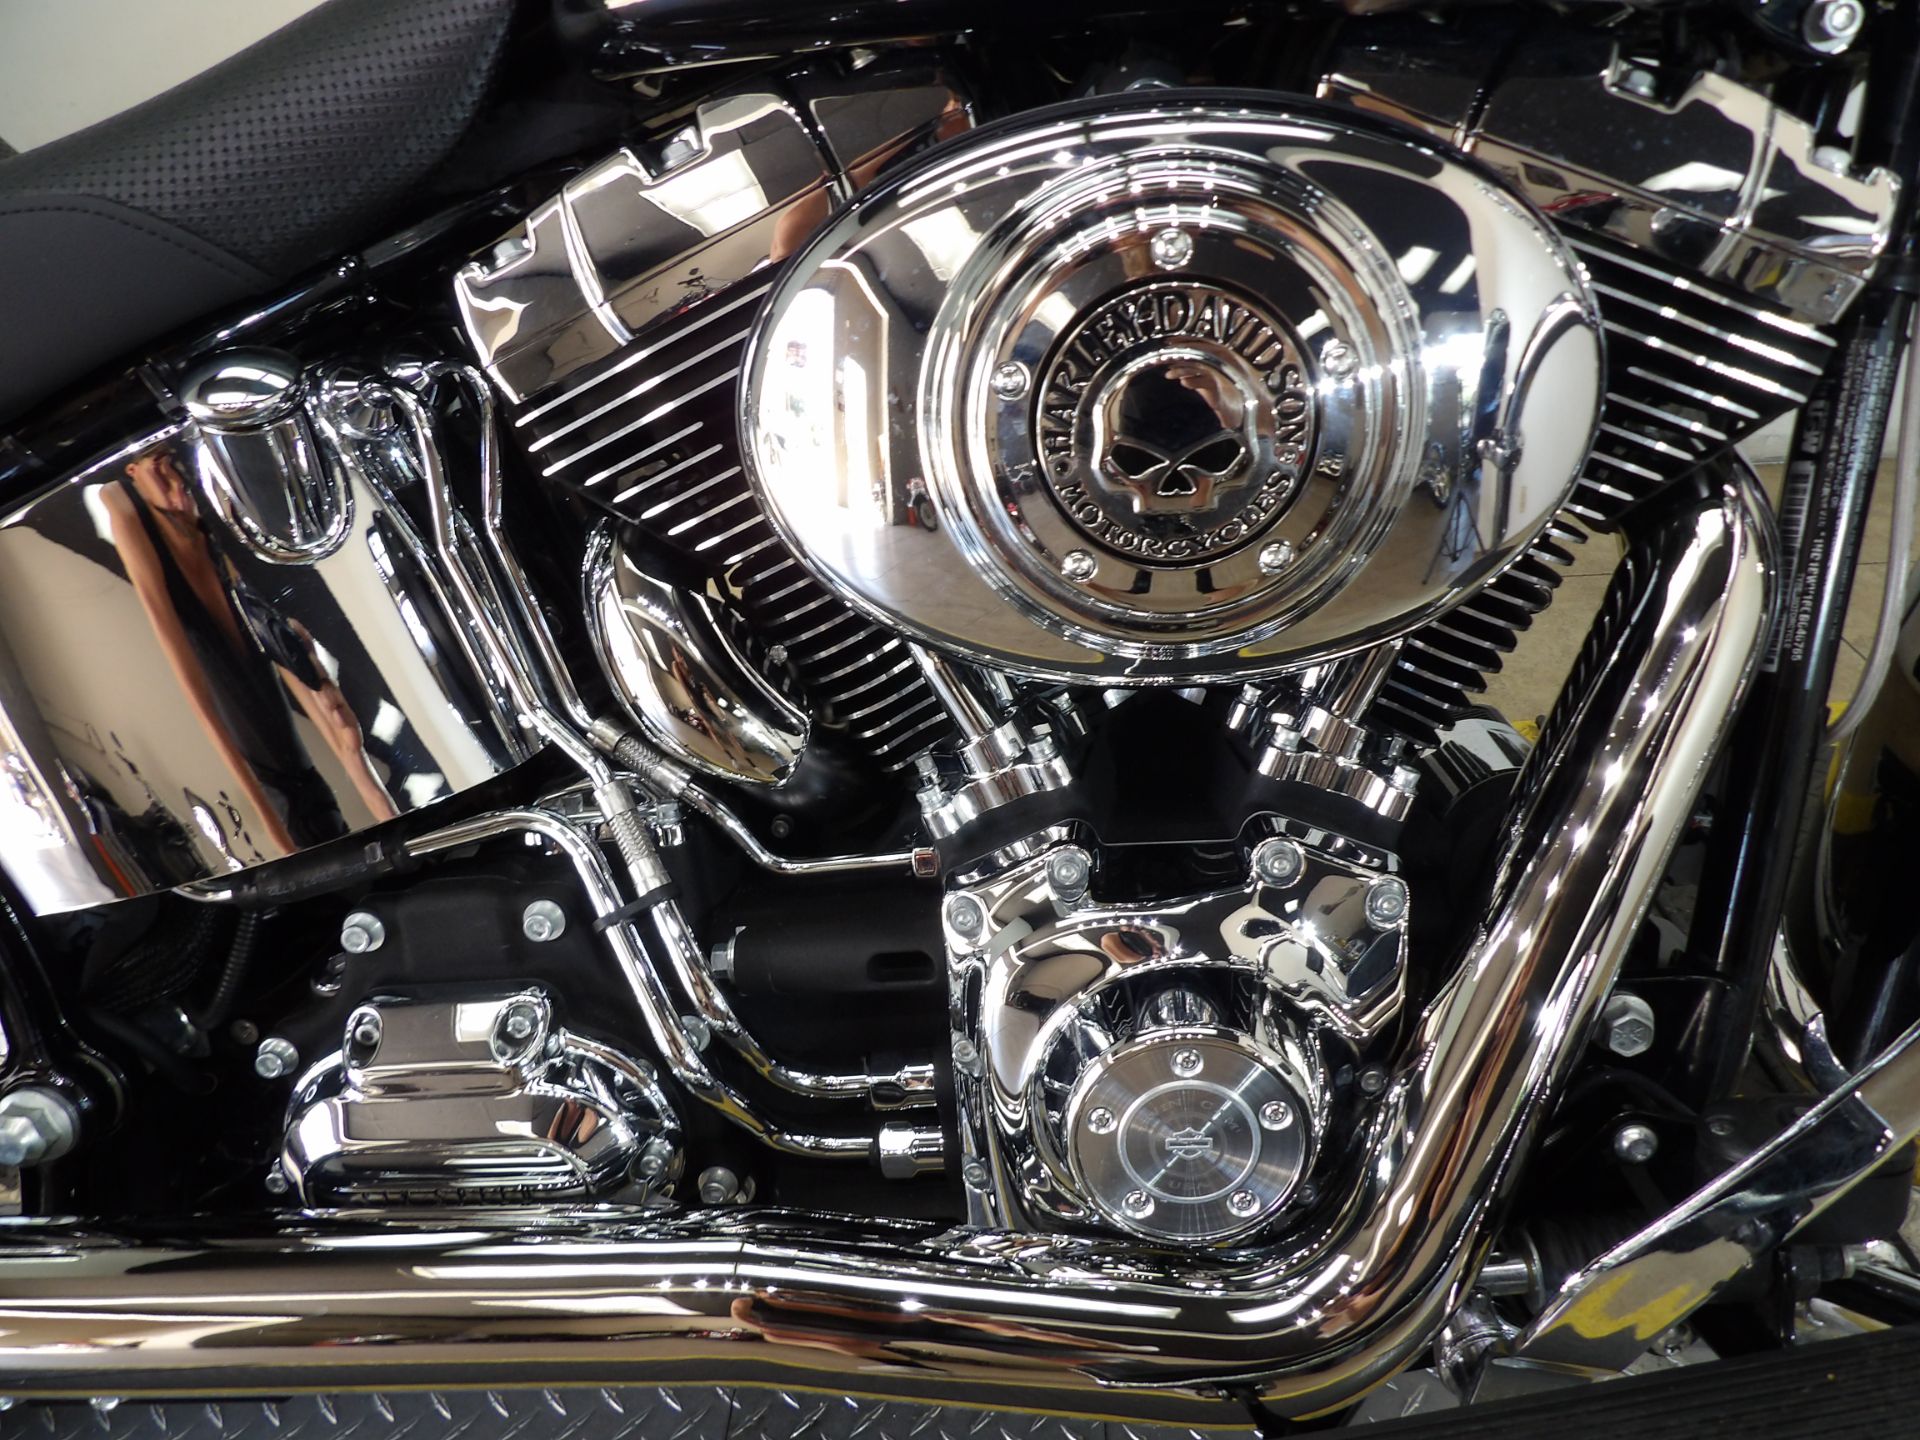 2012 Harley-Davidson Heritage Softail® Classic in Temecula, California - Photo 15